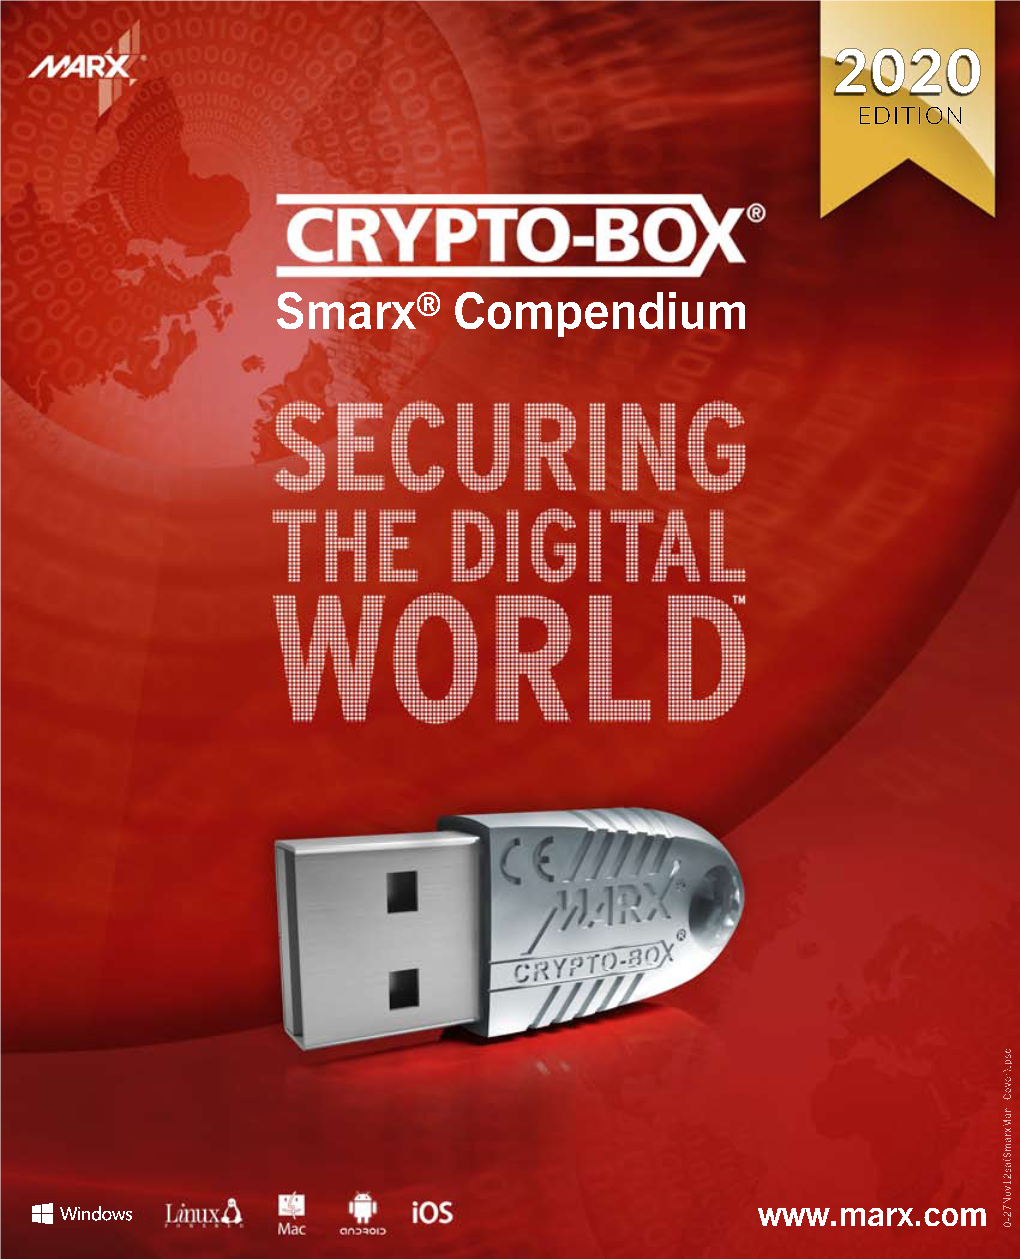 Smarx OS Compendium 2020 for the CRYPTO-BOX